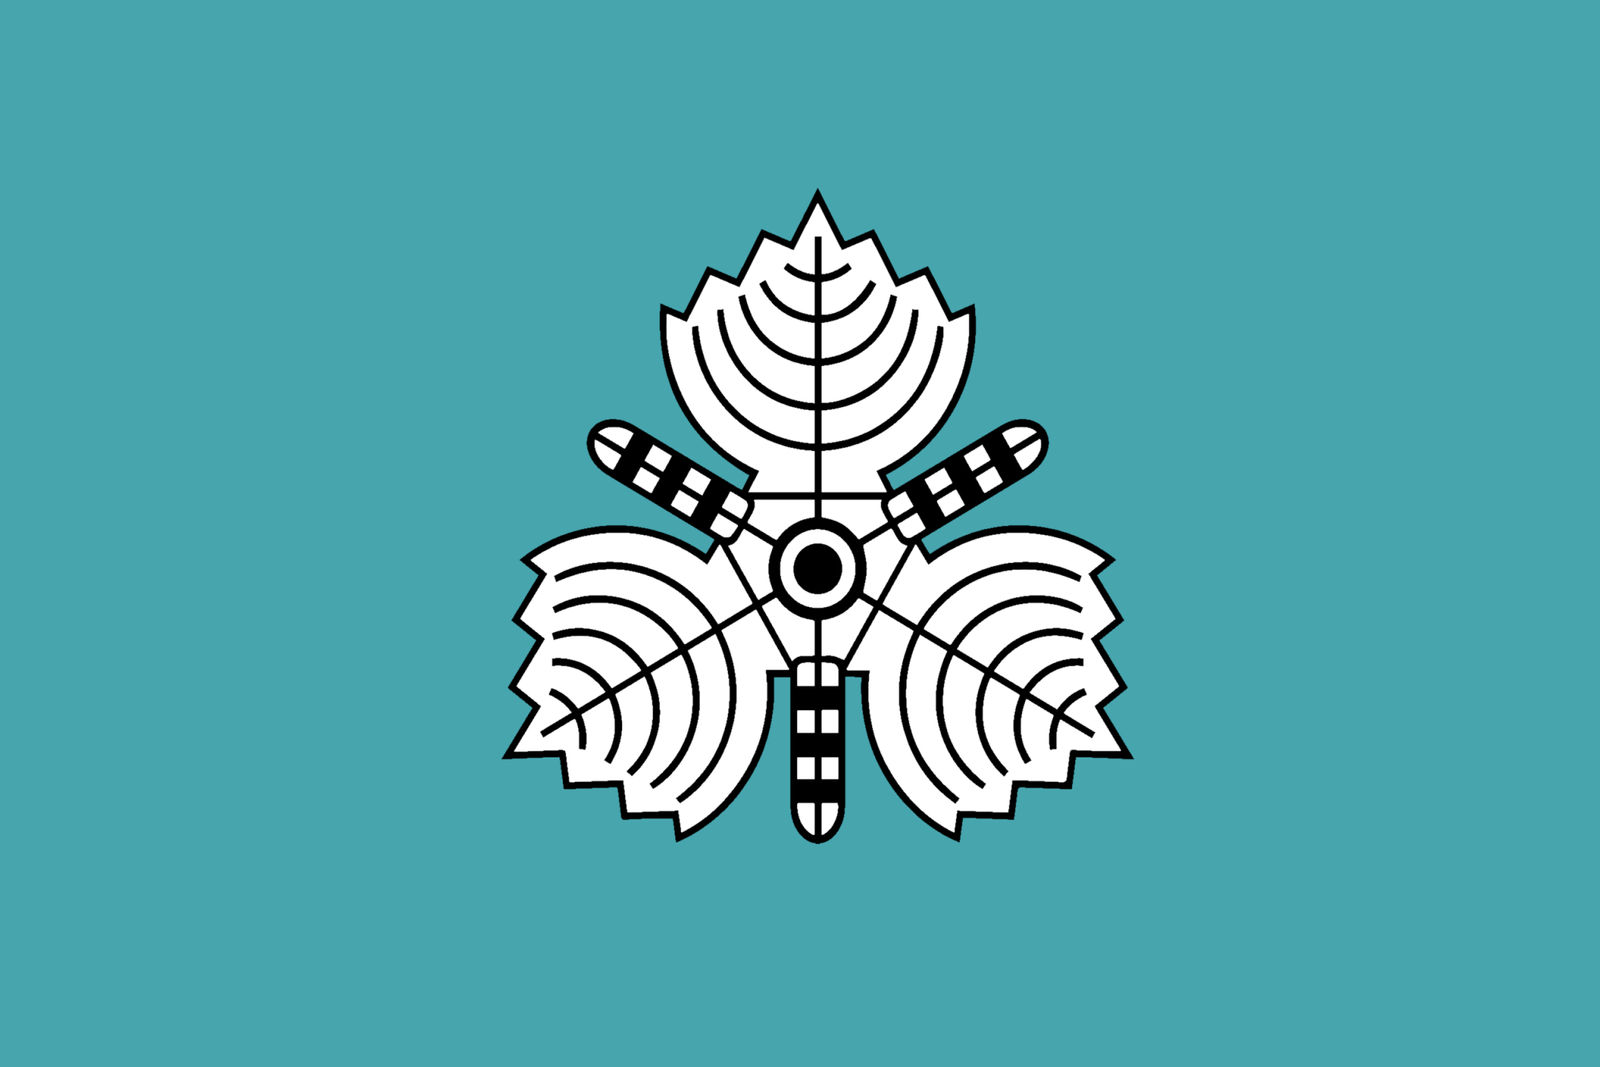 Karafuto Prefecture